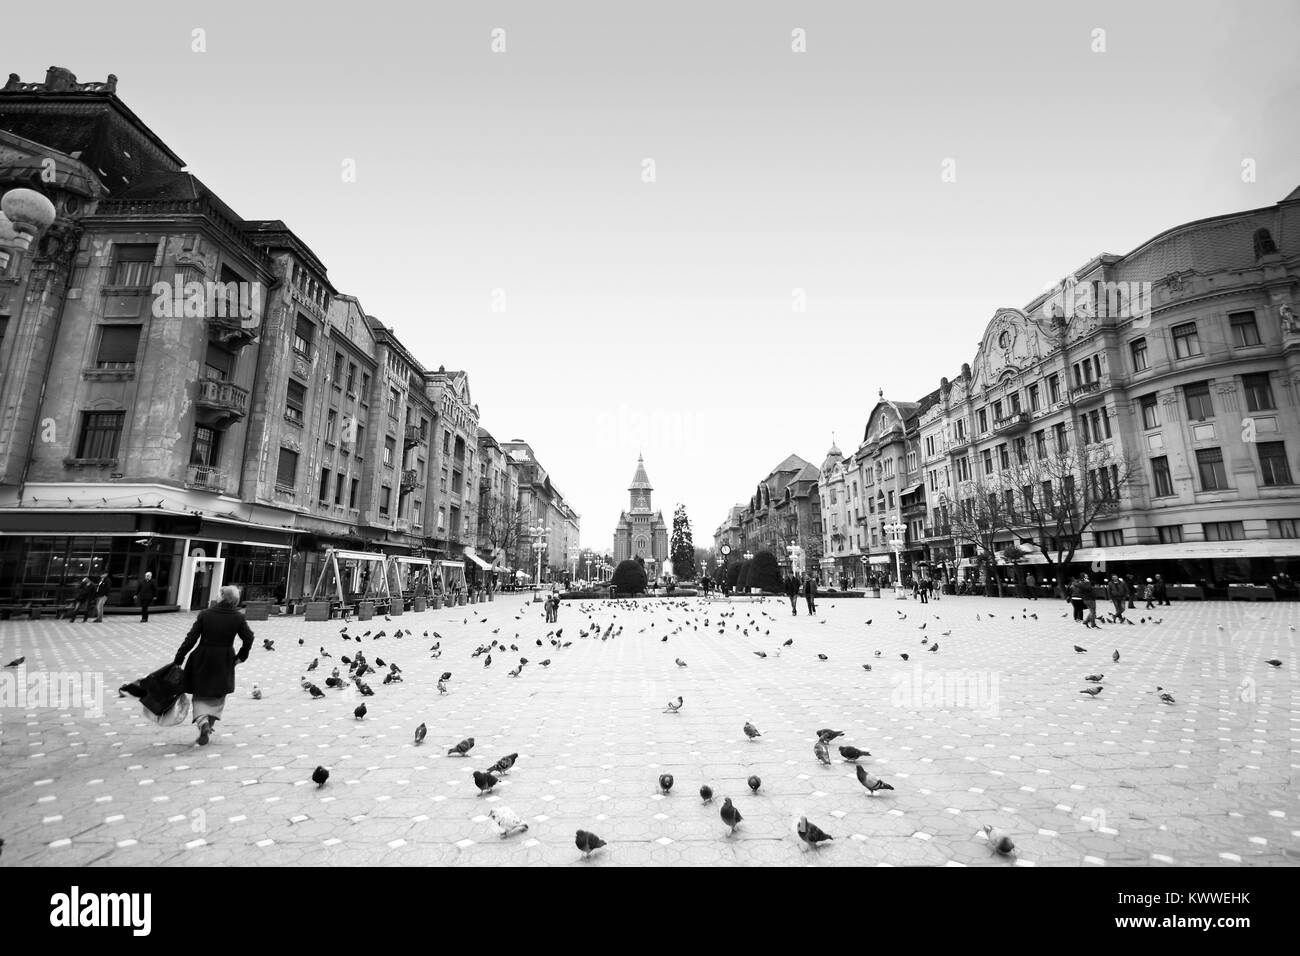 Timisoara, Romania - Piata Victoriei (Victory Square) with pigeons and pedestrians Stock Photo